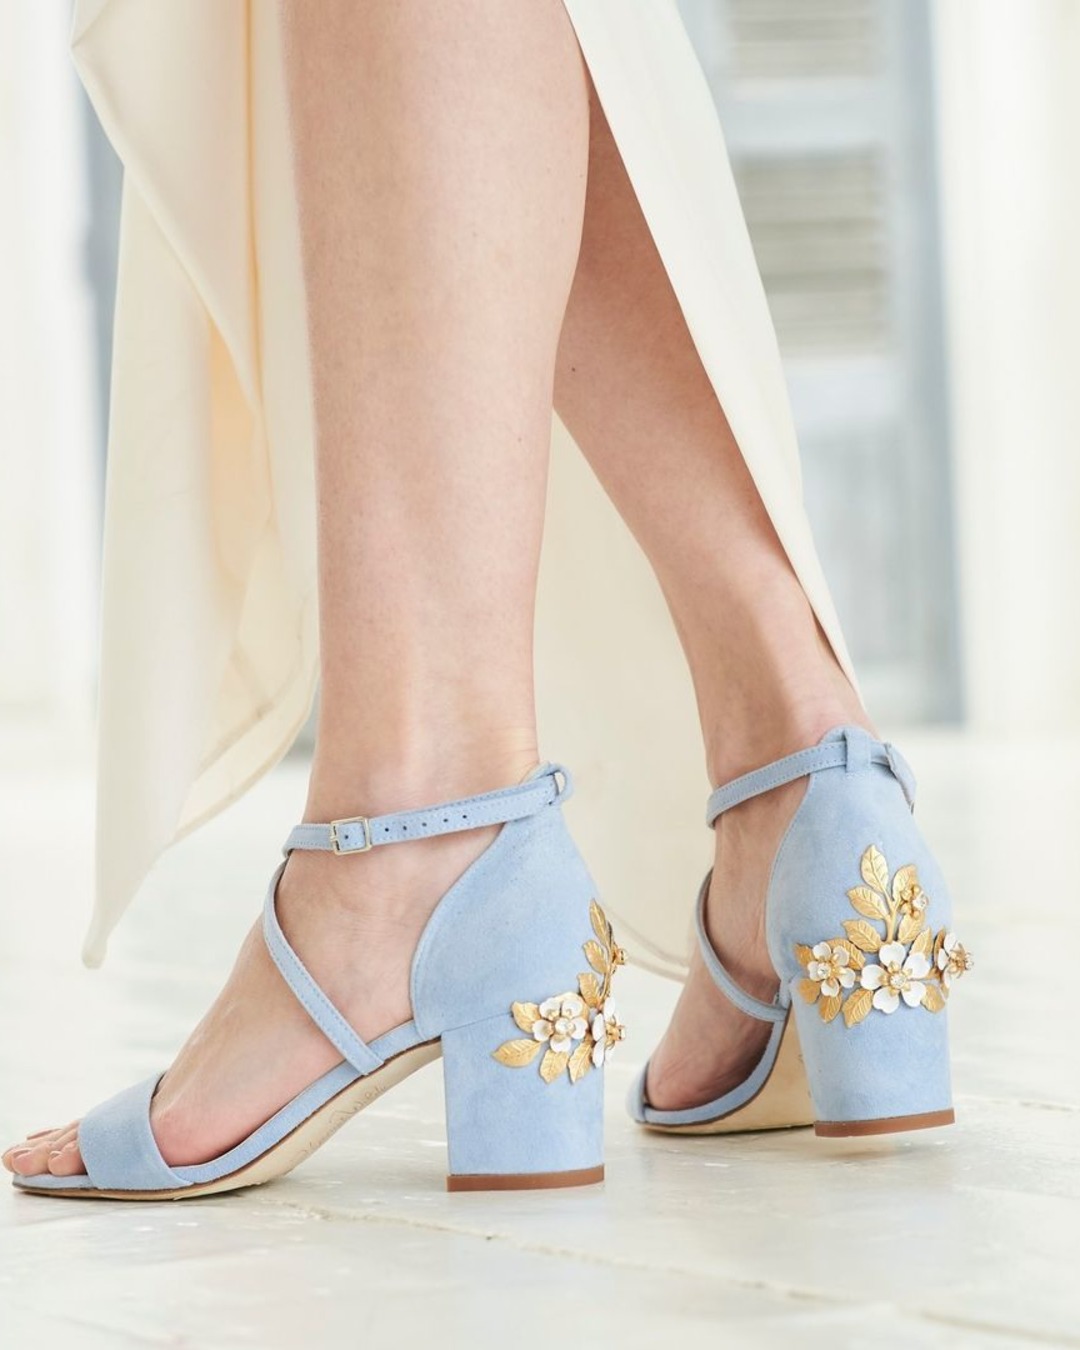 blue wedding shoes low heels